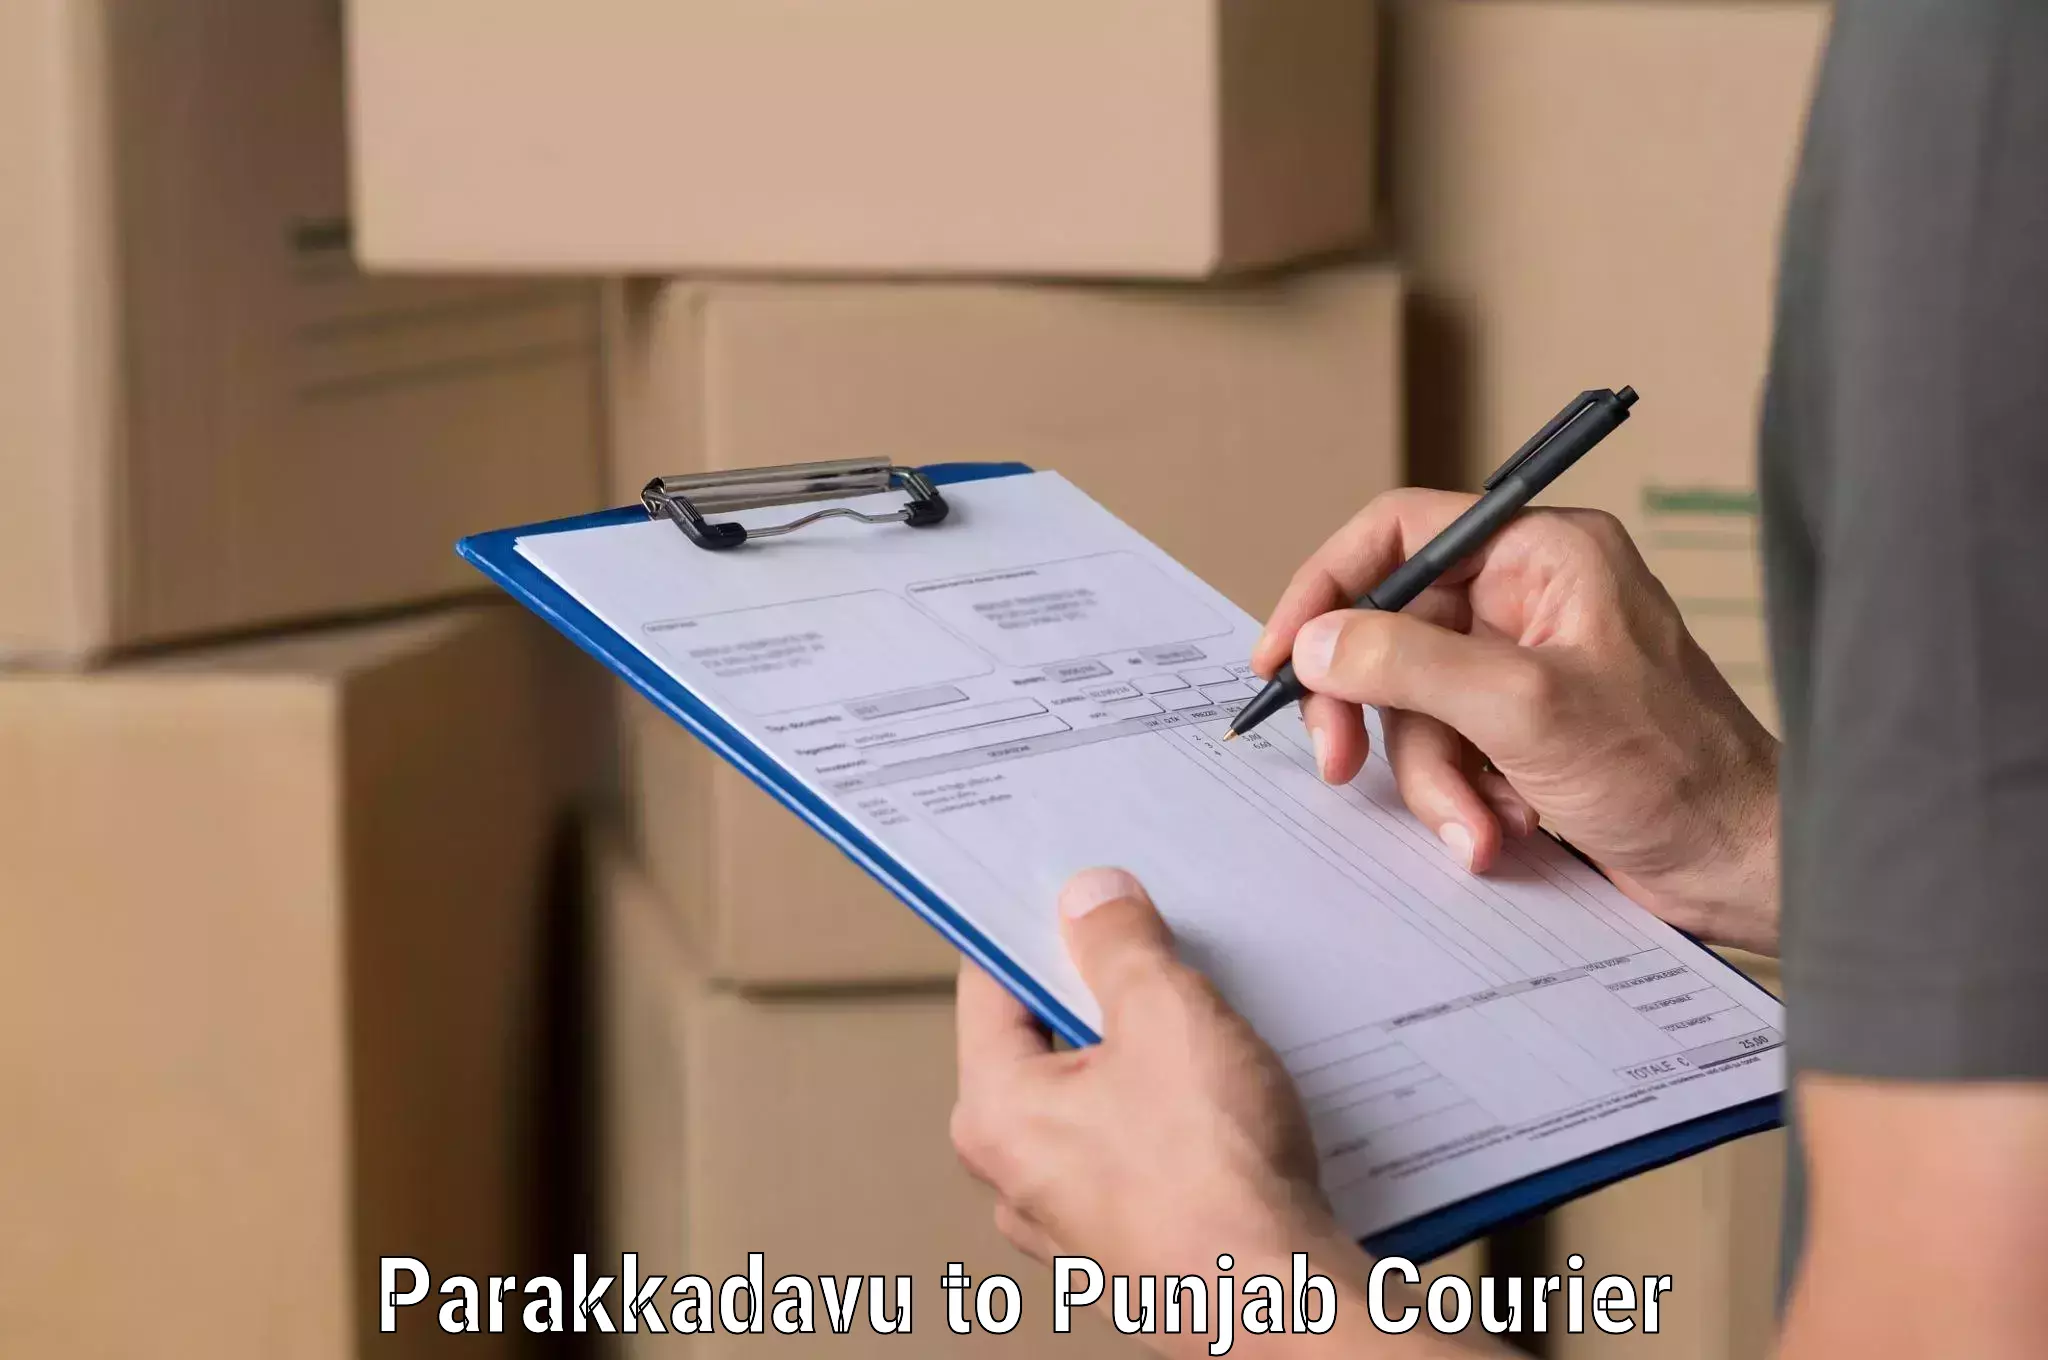 Express mail service Parakkadavu to Punjab